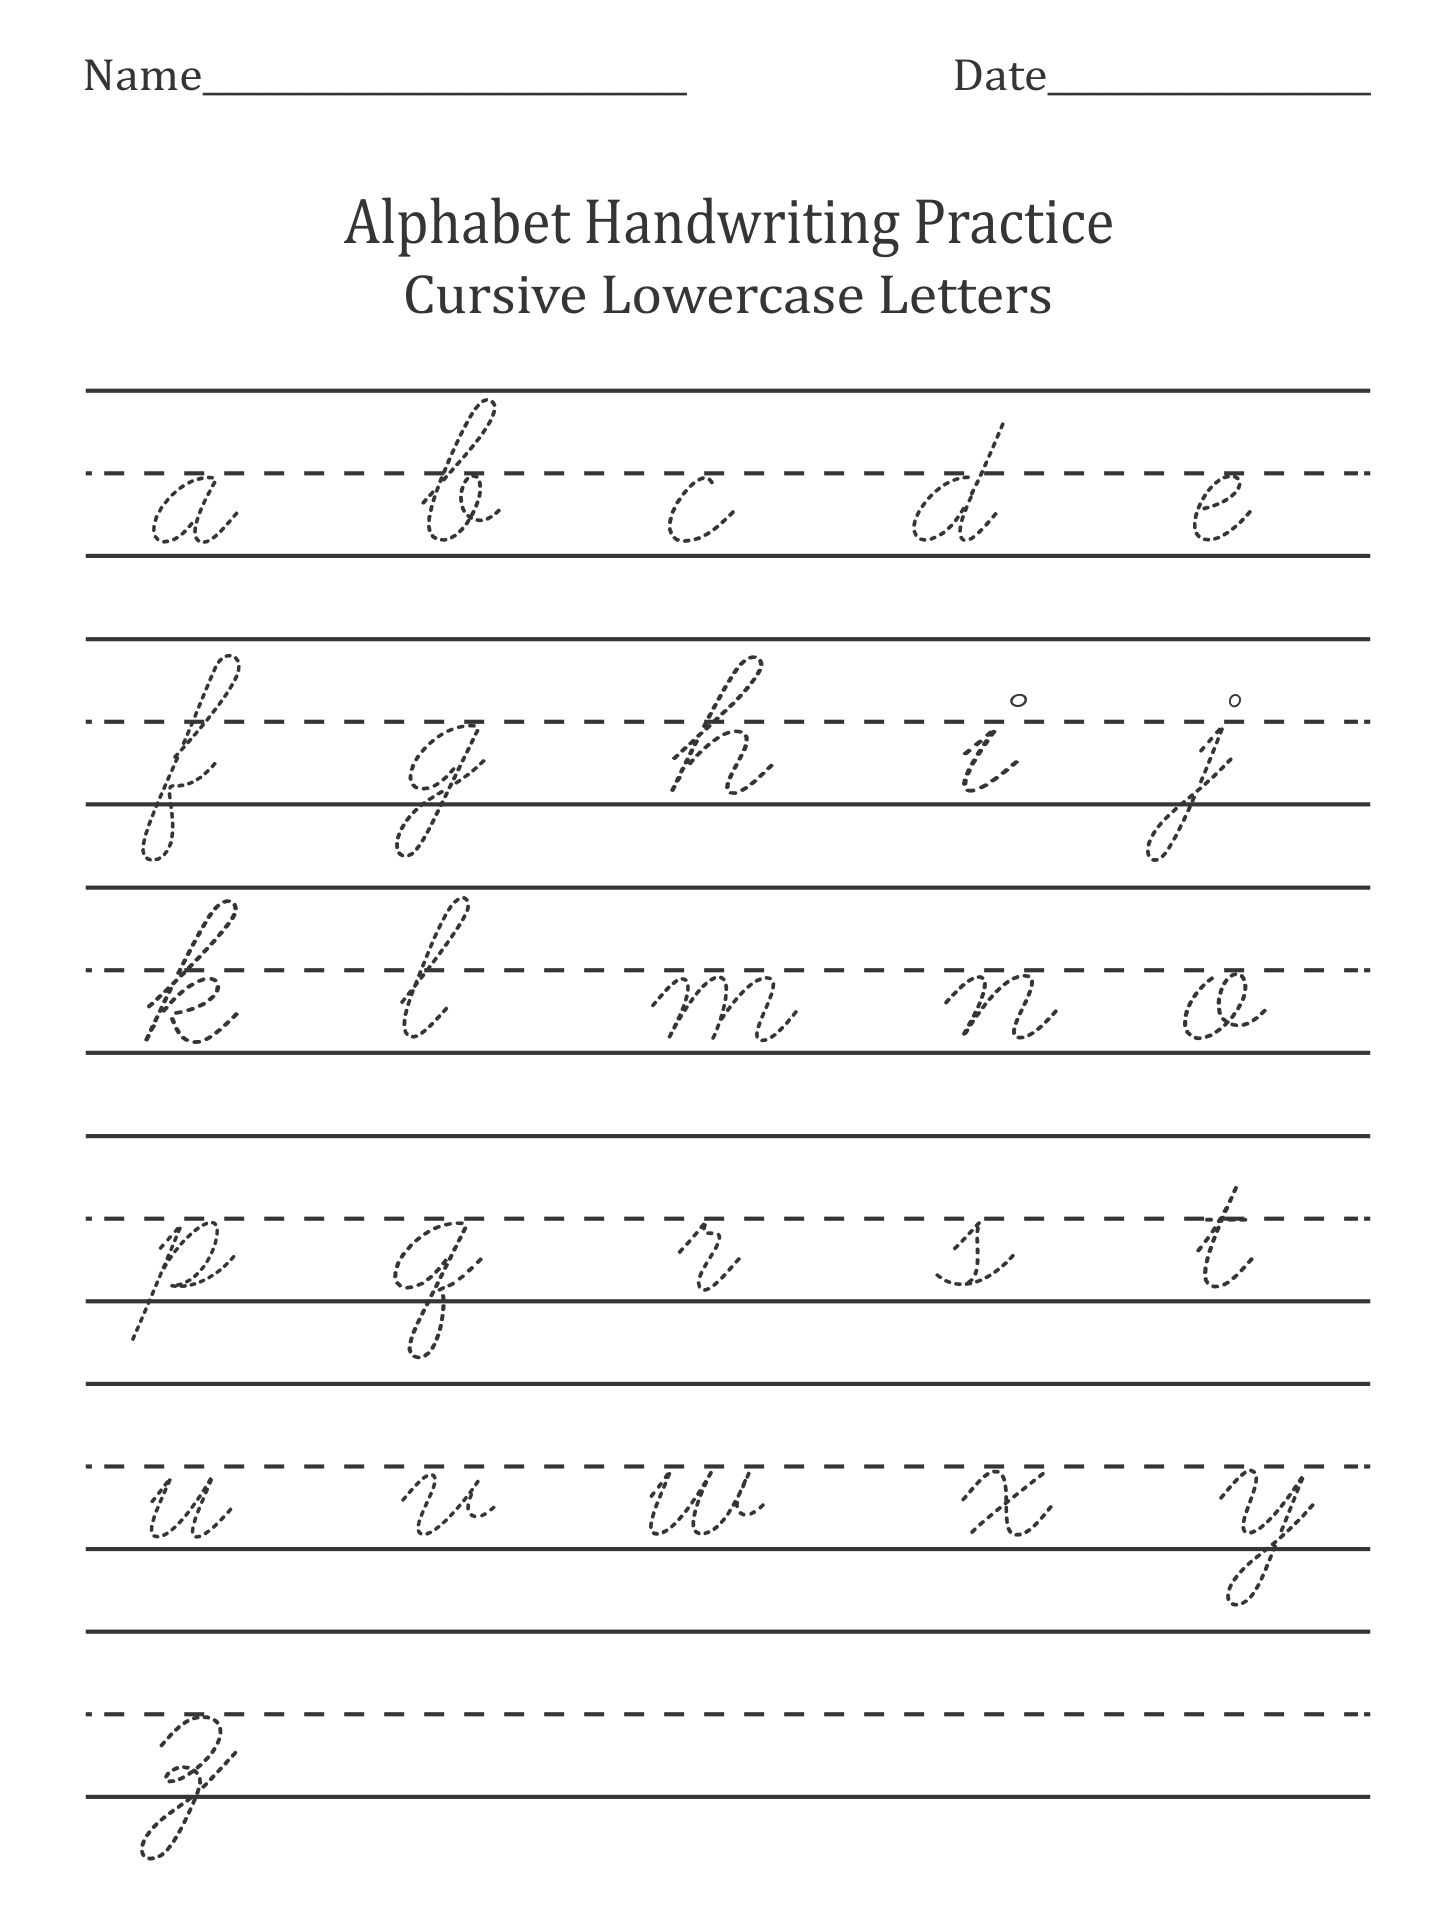 cursive-writing-free-printable-cursive-handwriting-worksheets-printable-form-templates-and-letter